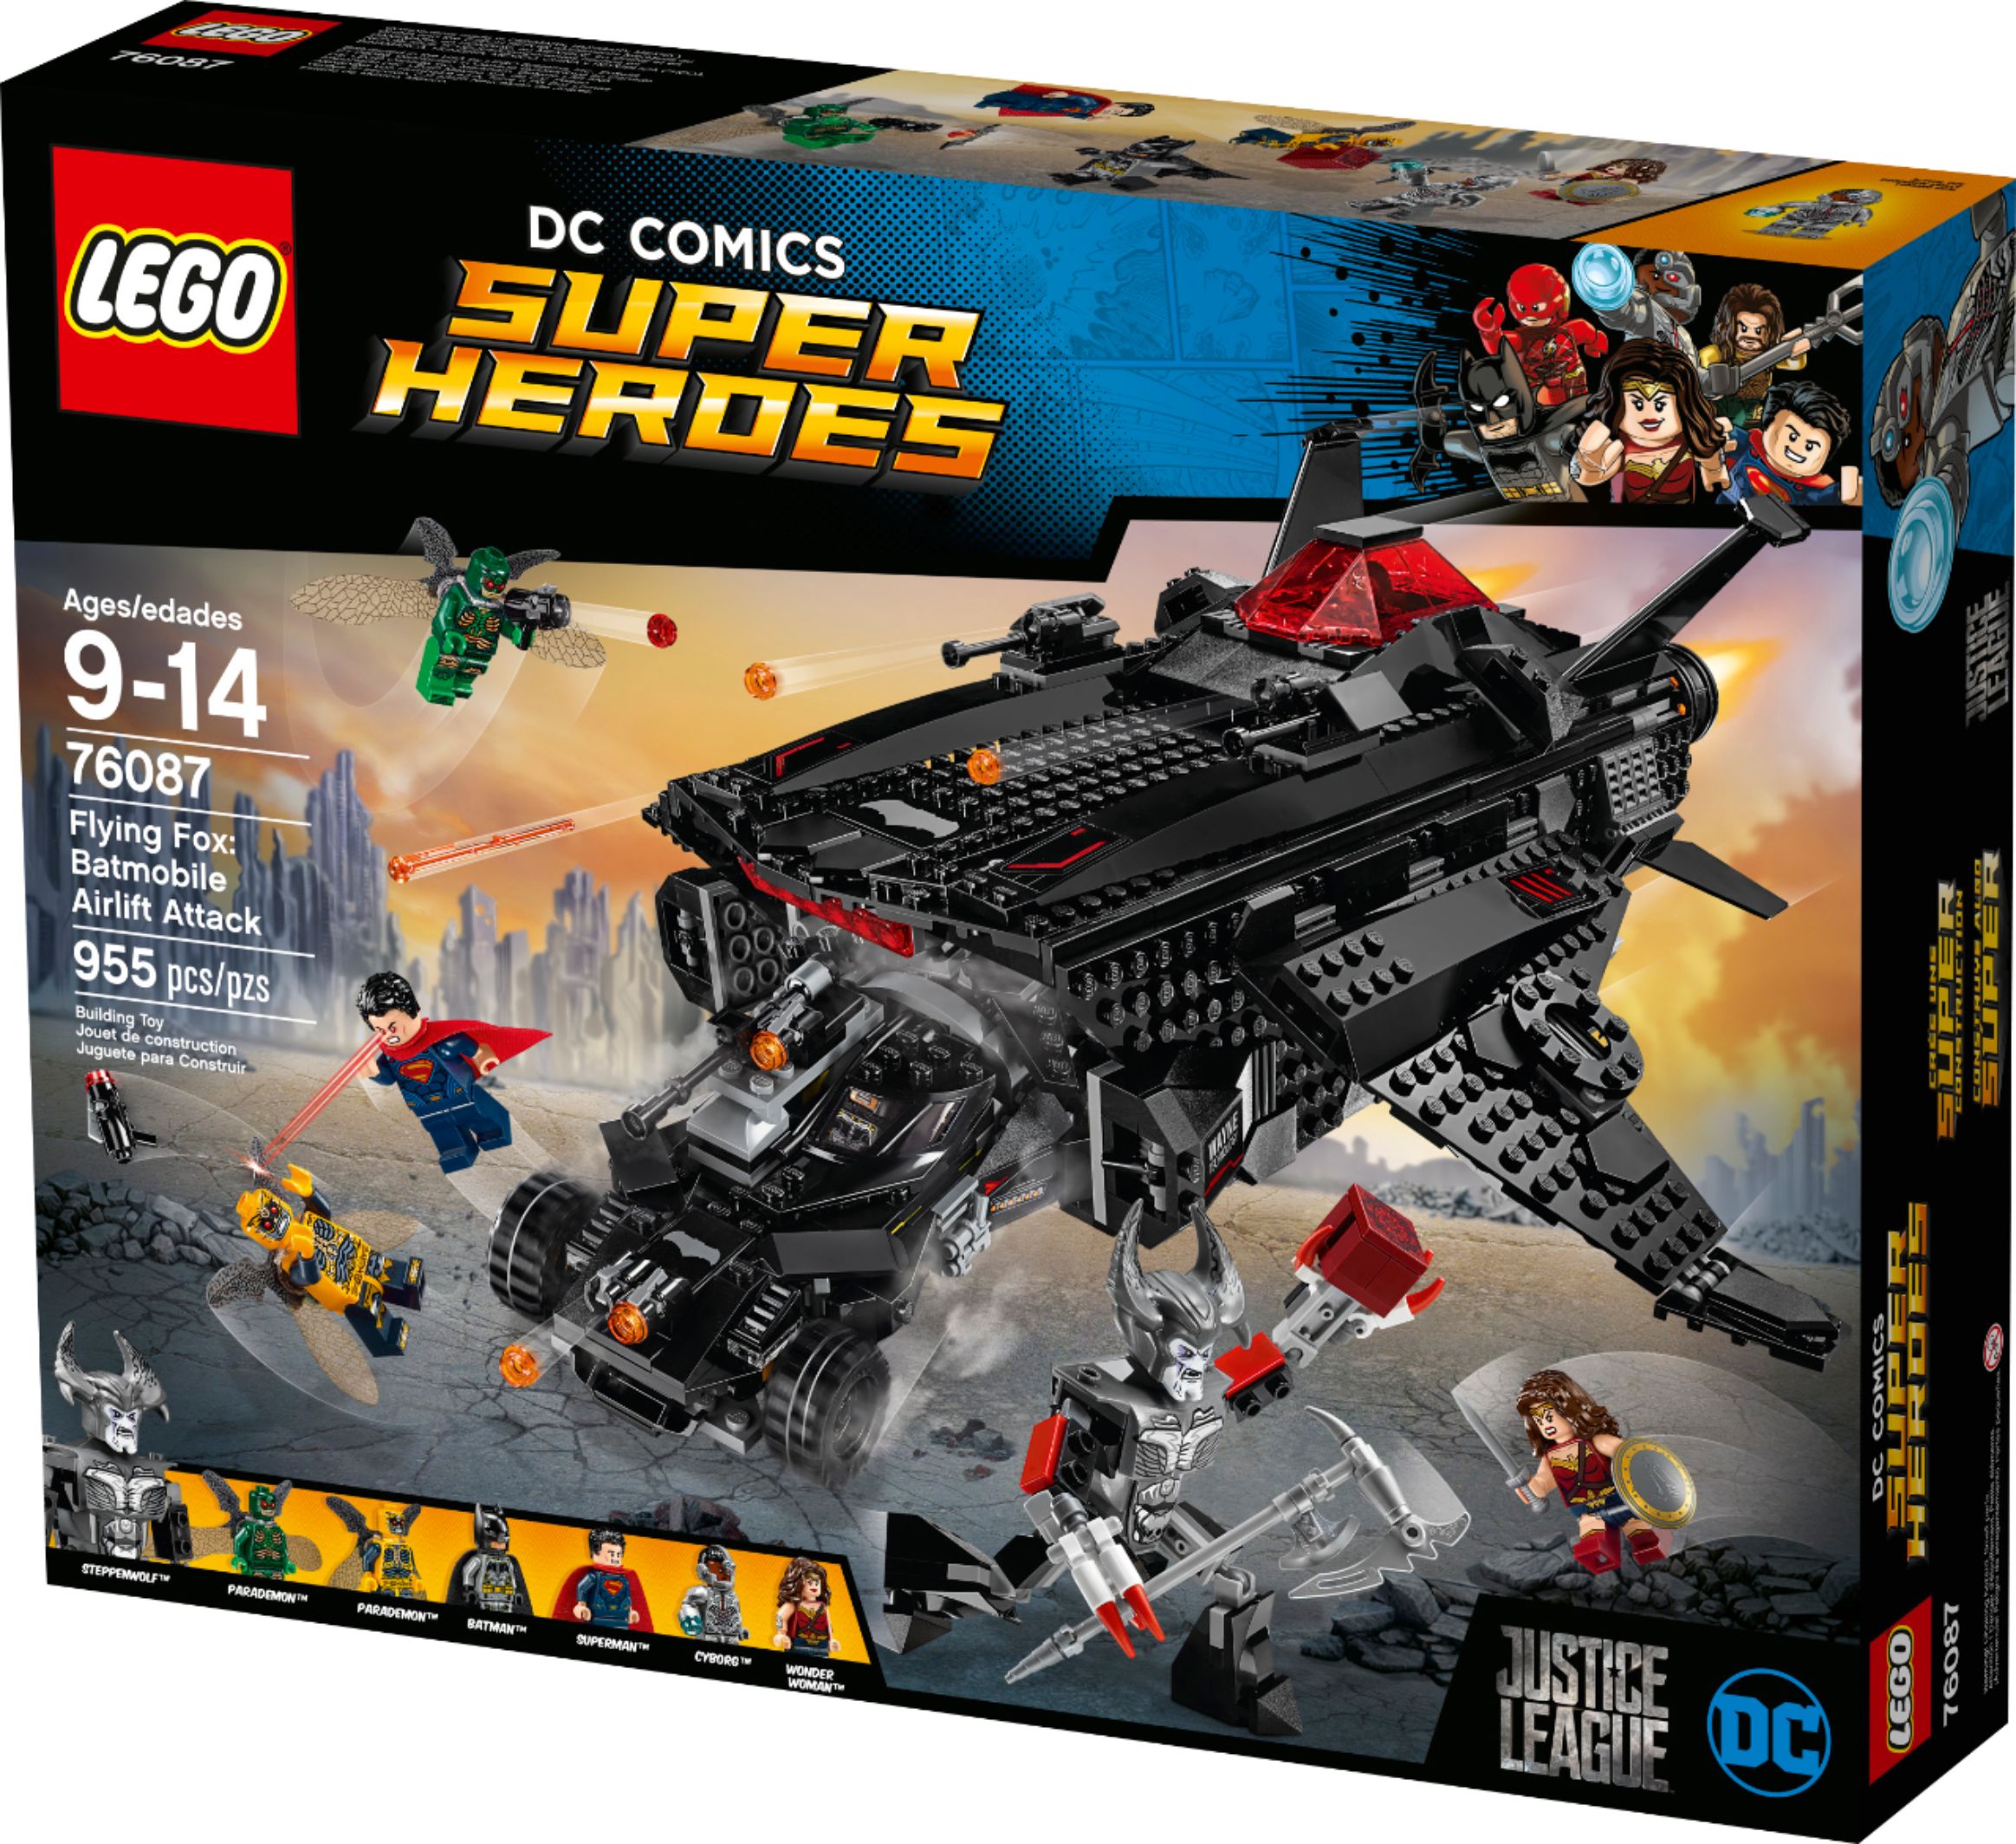 Batmobile Airlift Attack Flying Fox Brand New Lego Super Heroes 76087 